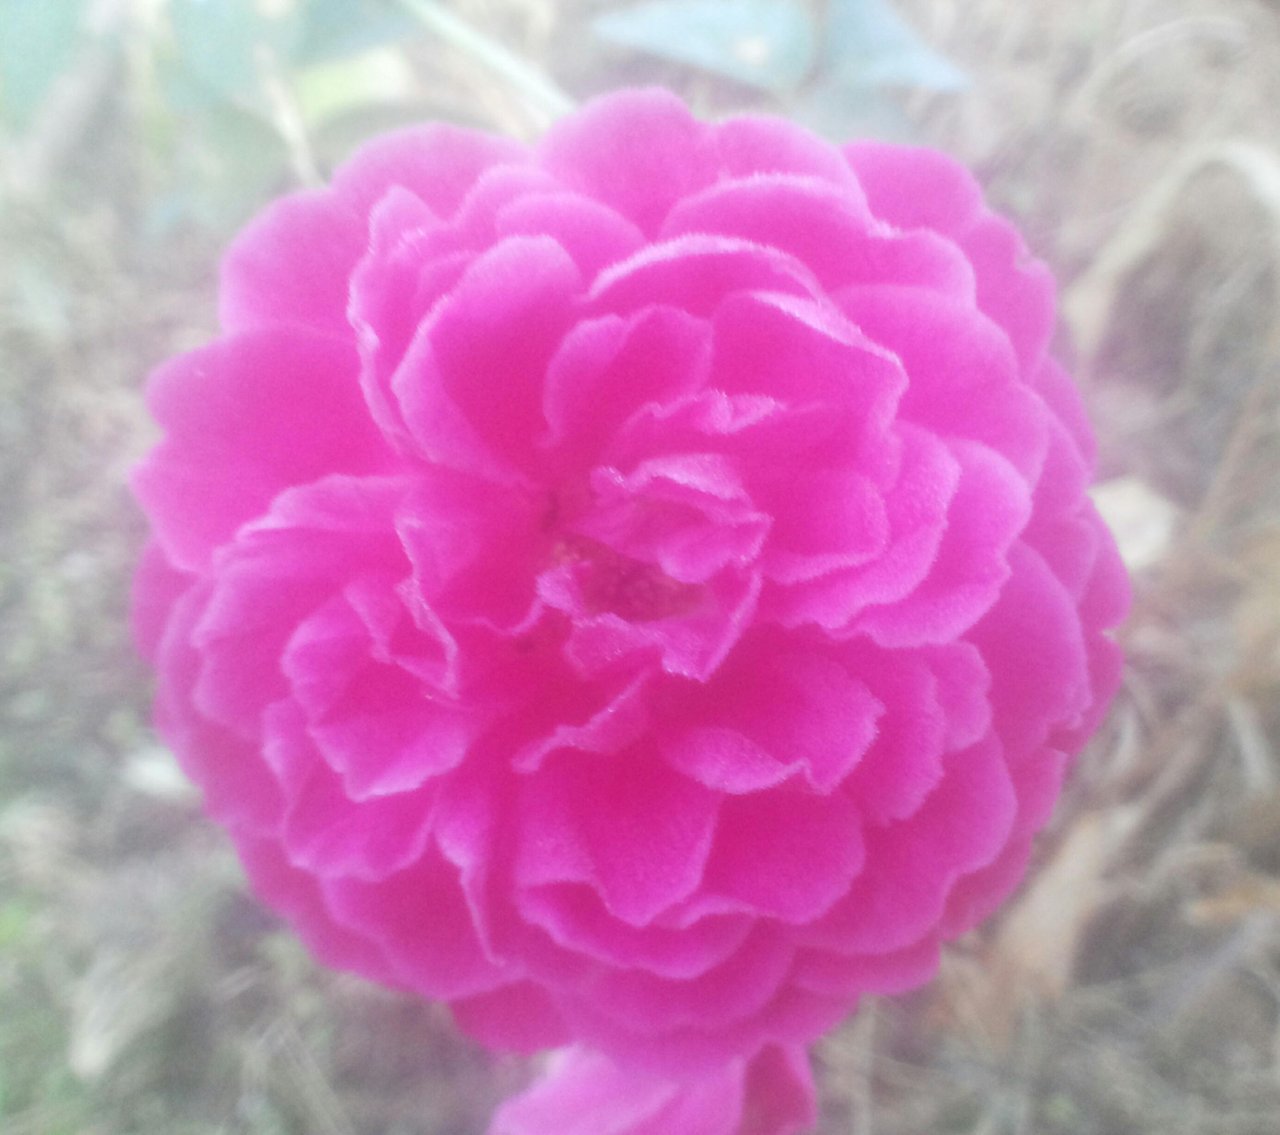 Koleksi Edisi Bunga Pink Pink Flowers Edition Collection